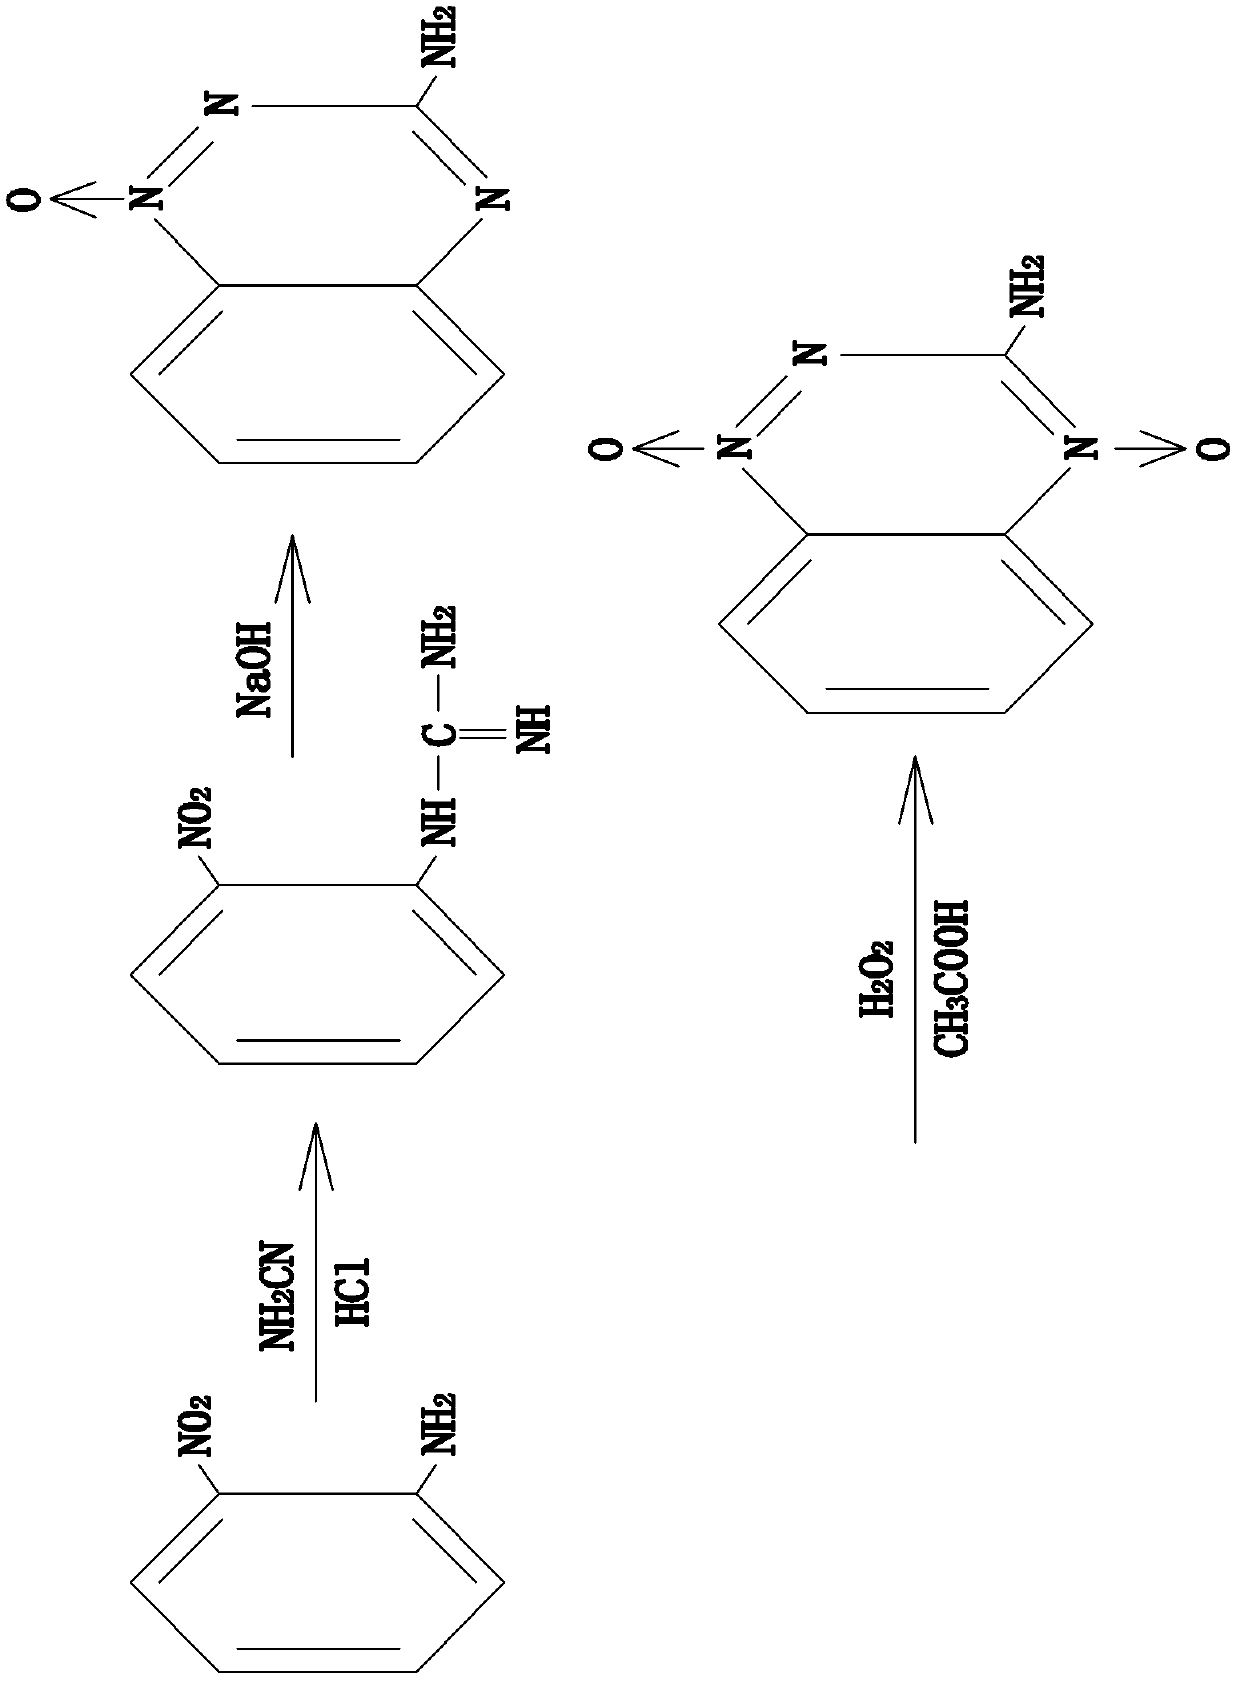 Synthesis method for 3-amino-1,2,4-phentriazine-1,4-dioxide